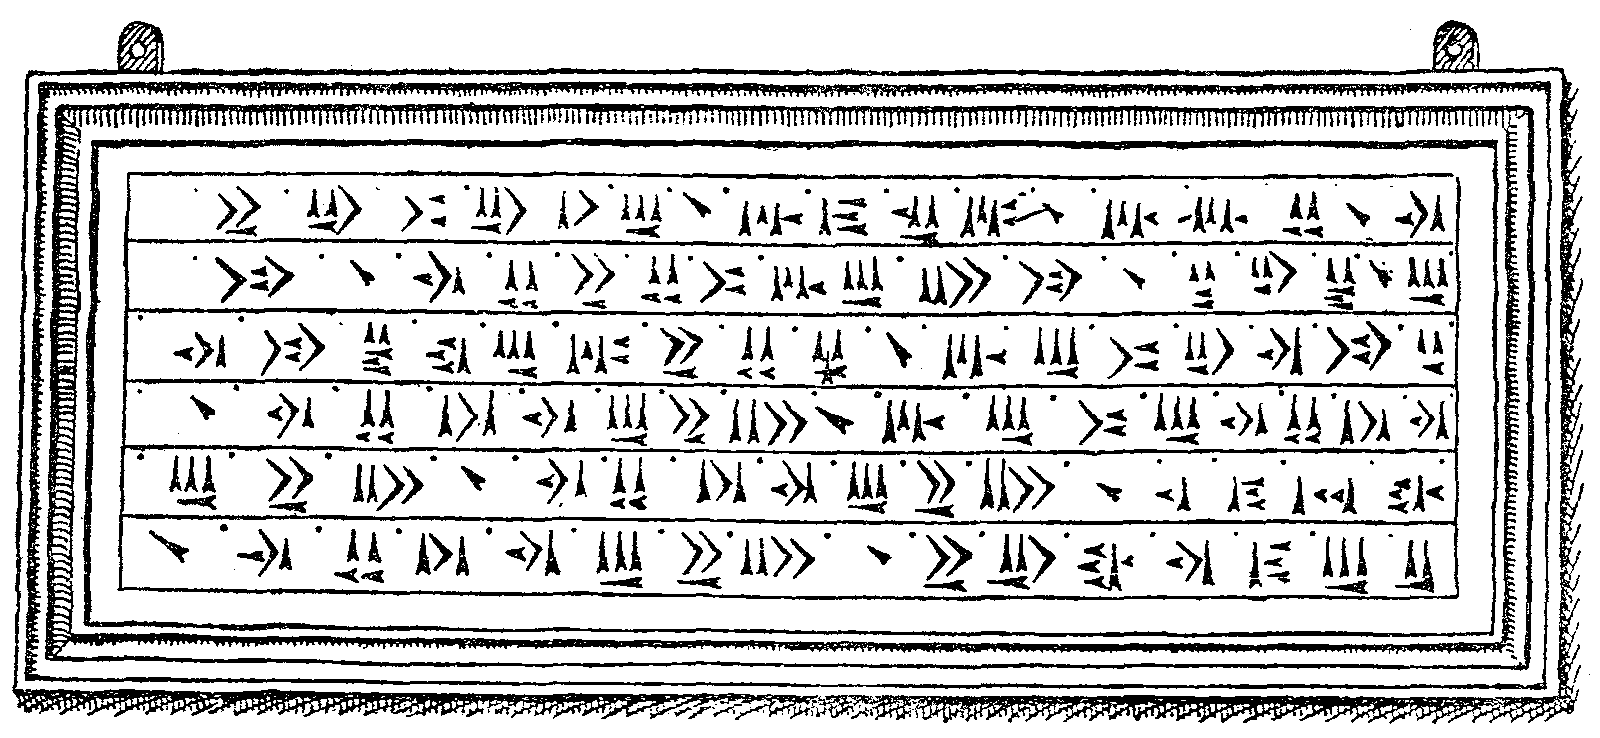 cuneiform inscription